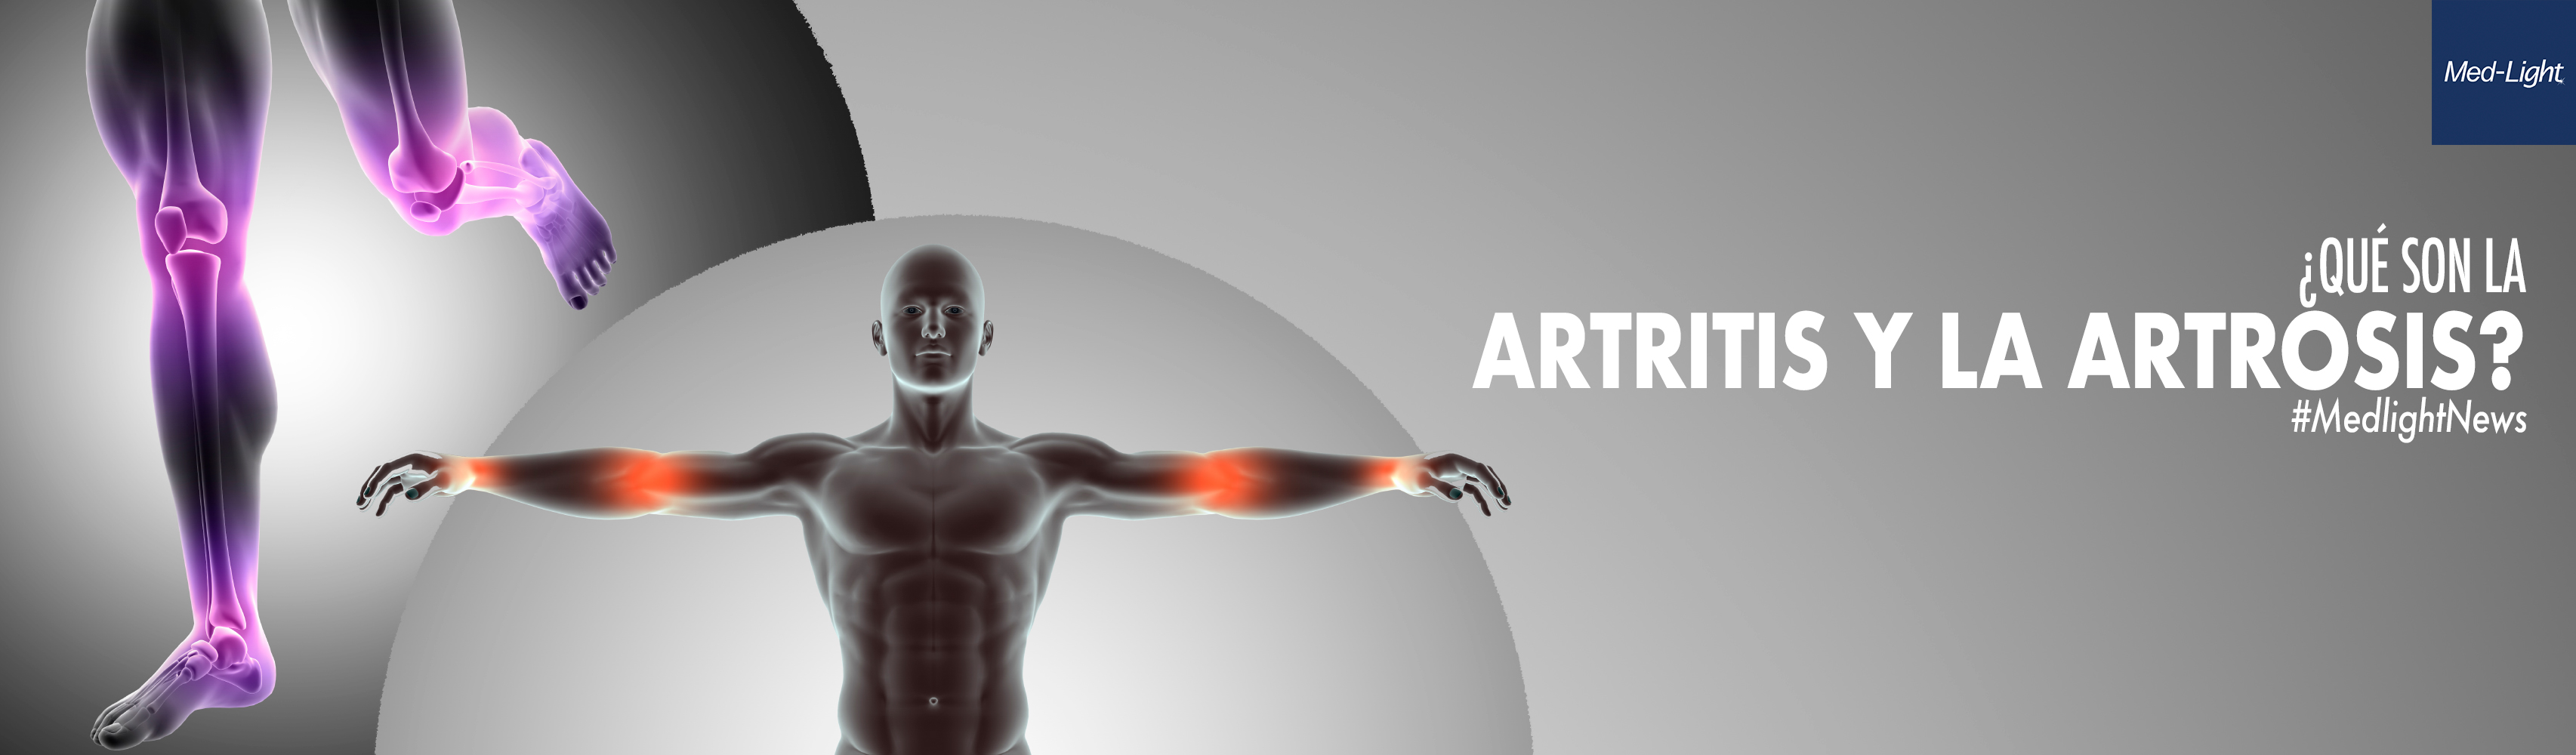 ARTRITIS Y ARTROSIS Blog Medlight Medical